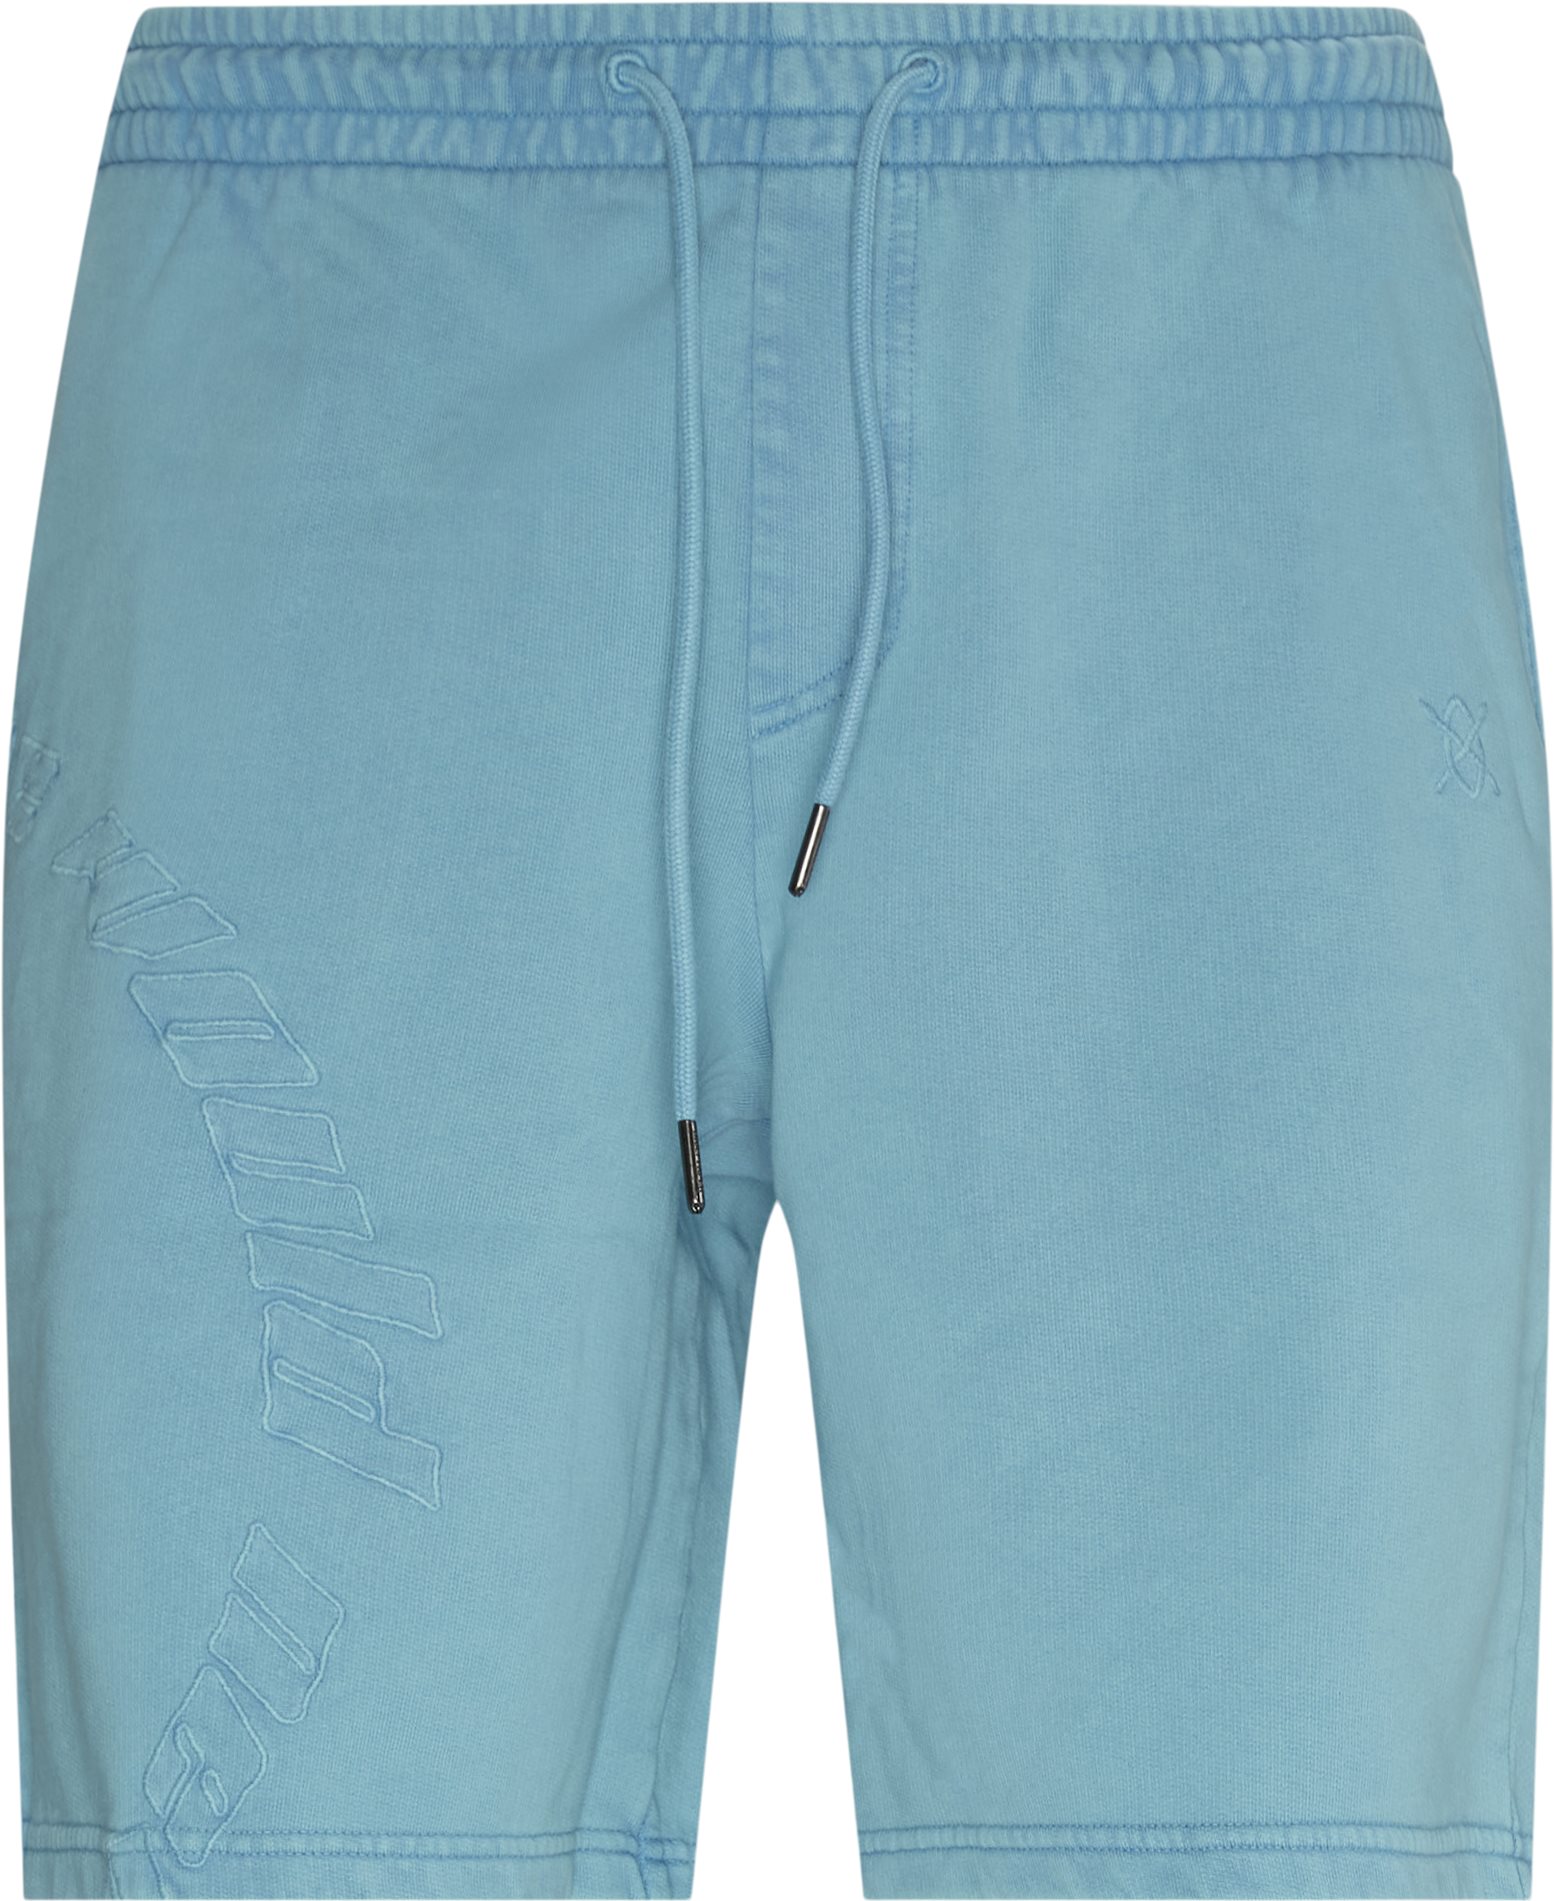 Kacid Sweatshorts - Shorts - Regular fit - Blue